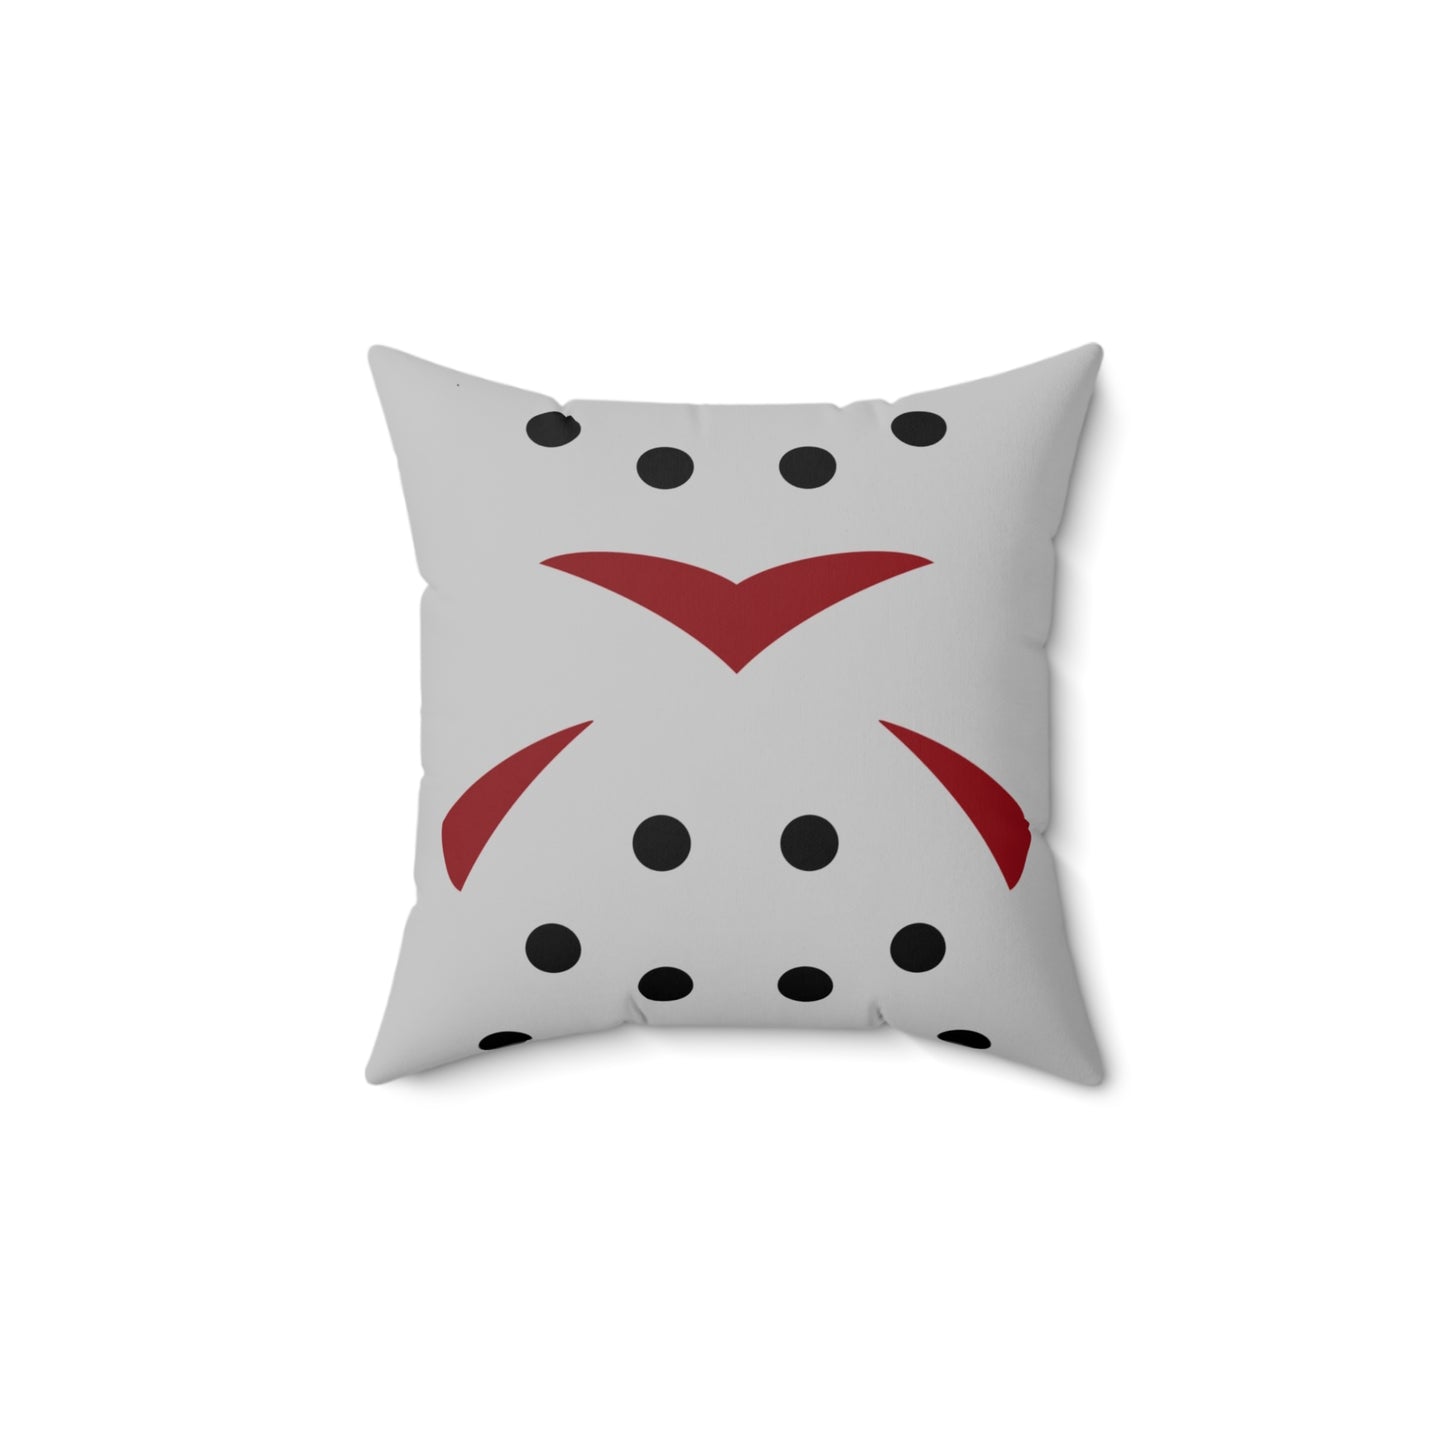 Jason’s Mask Throw Pillow